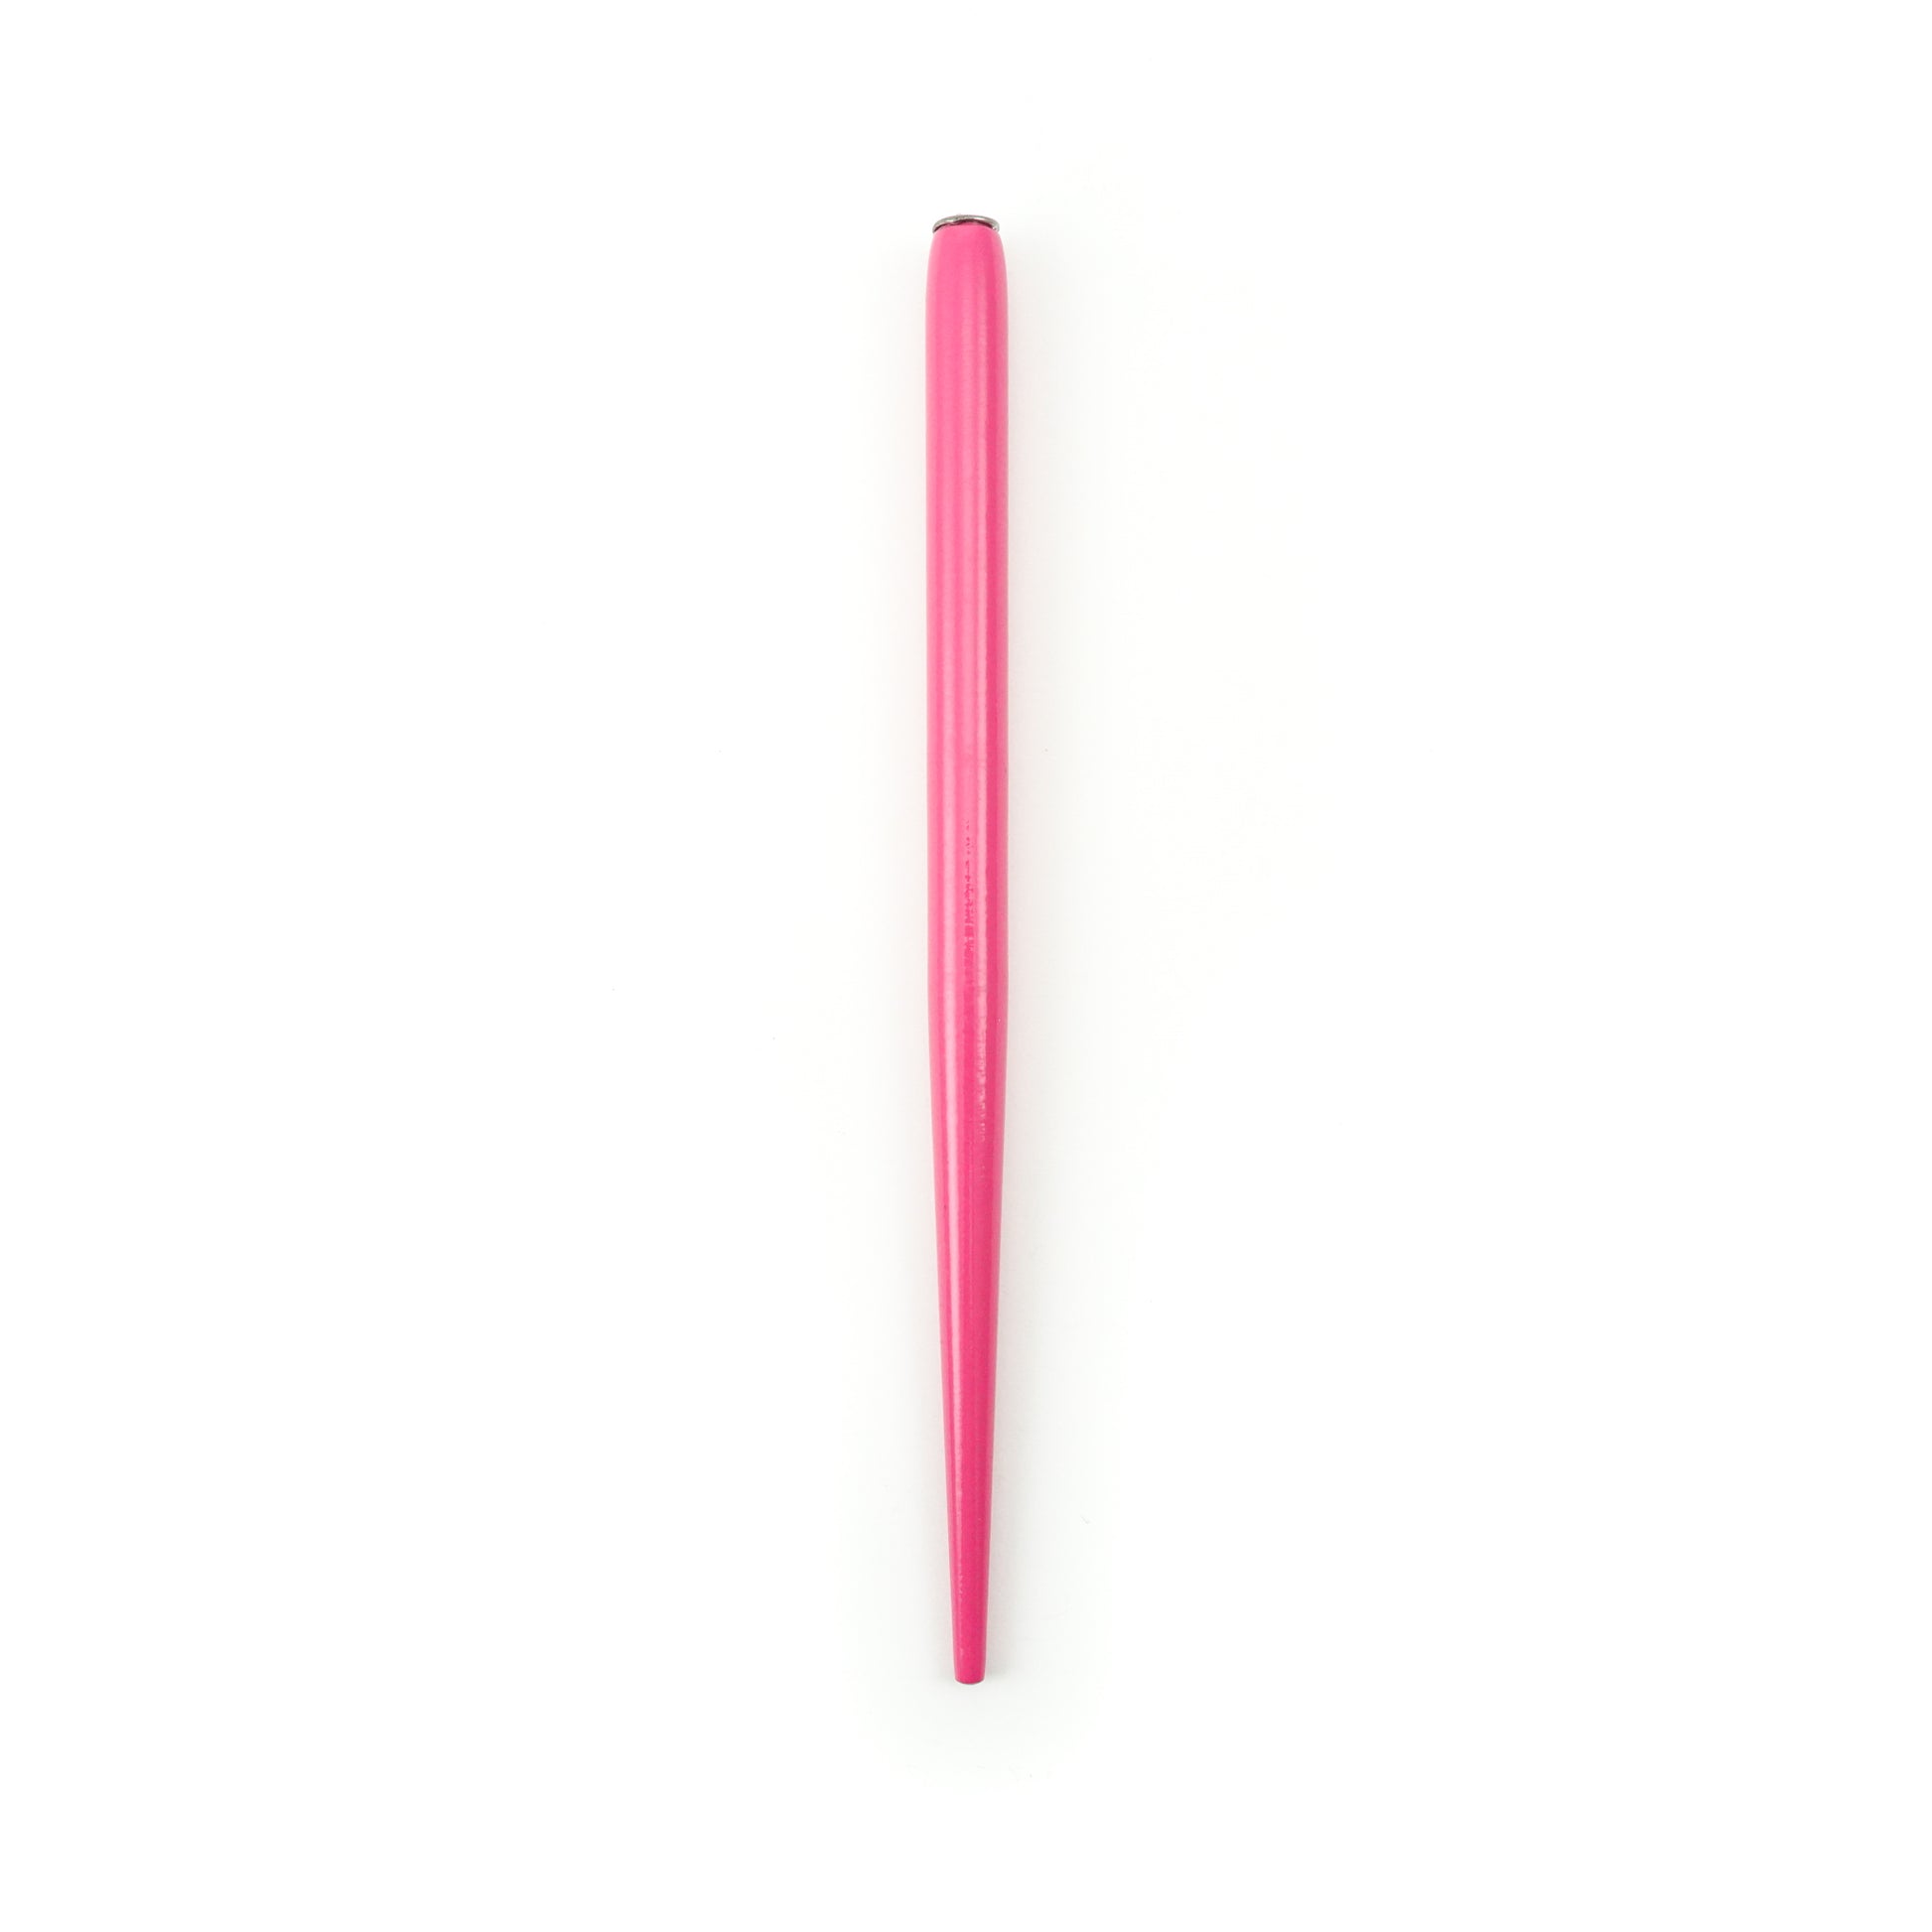 Manuscript Calligraphy Pen Holders - Pink by Manuscript - K. A. Artist Shop